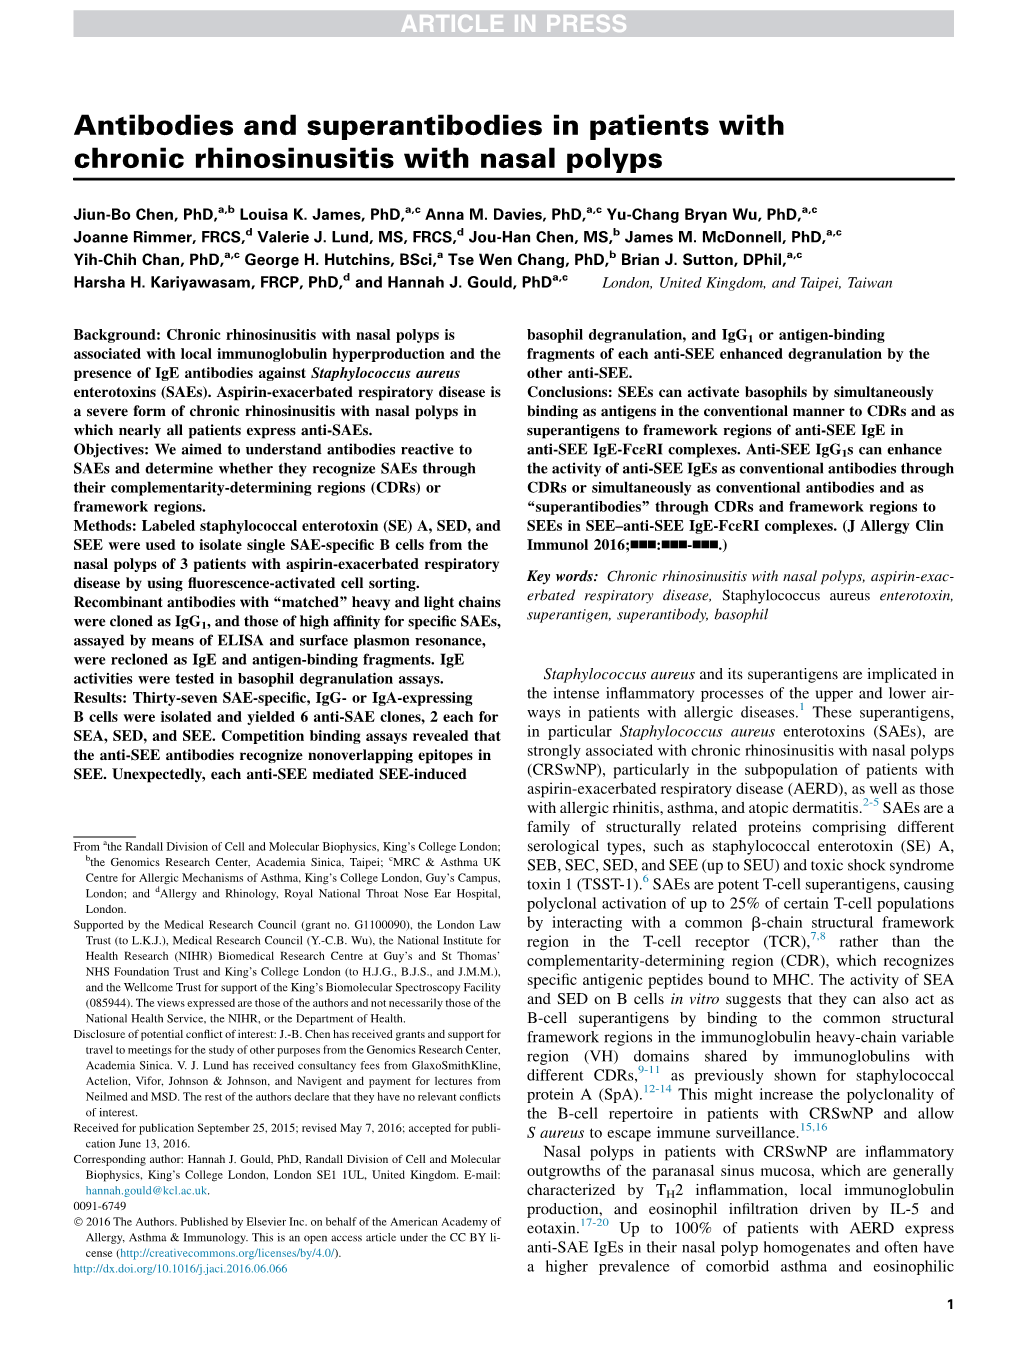 Antibodies and Superantibodies in Patients with Chronic Rhinosinusitis with Nasal Polyps